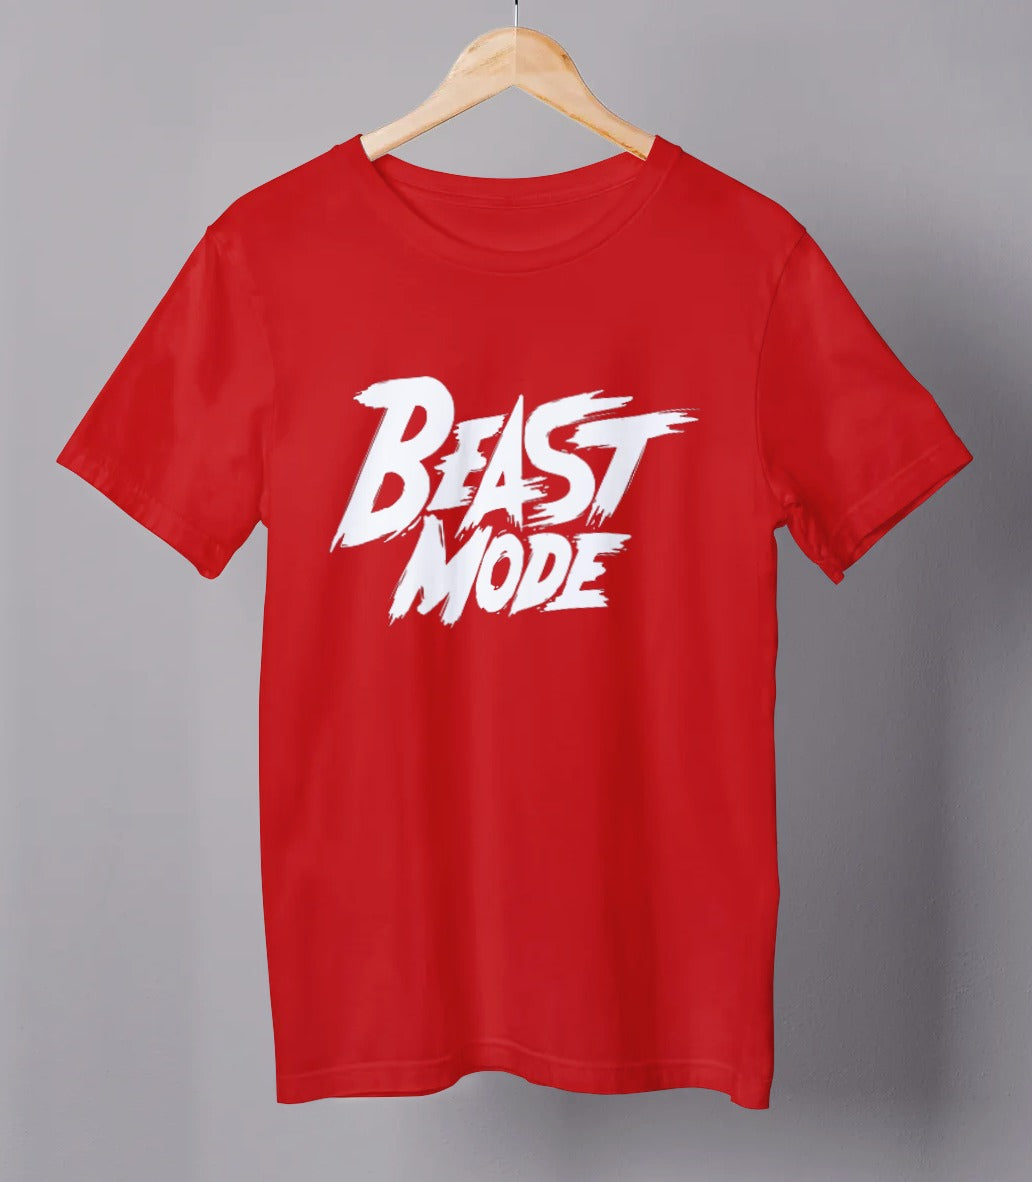 Beast mode red hanging half sleeve men's tshirt